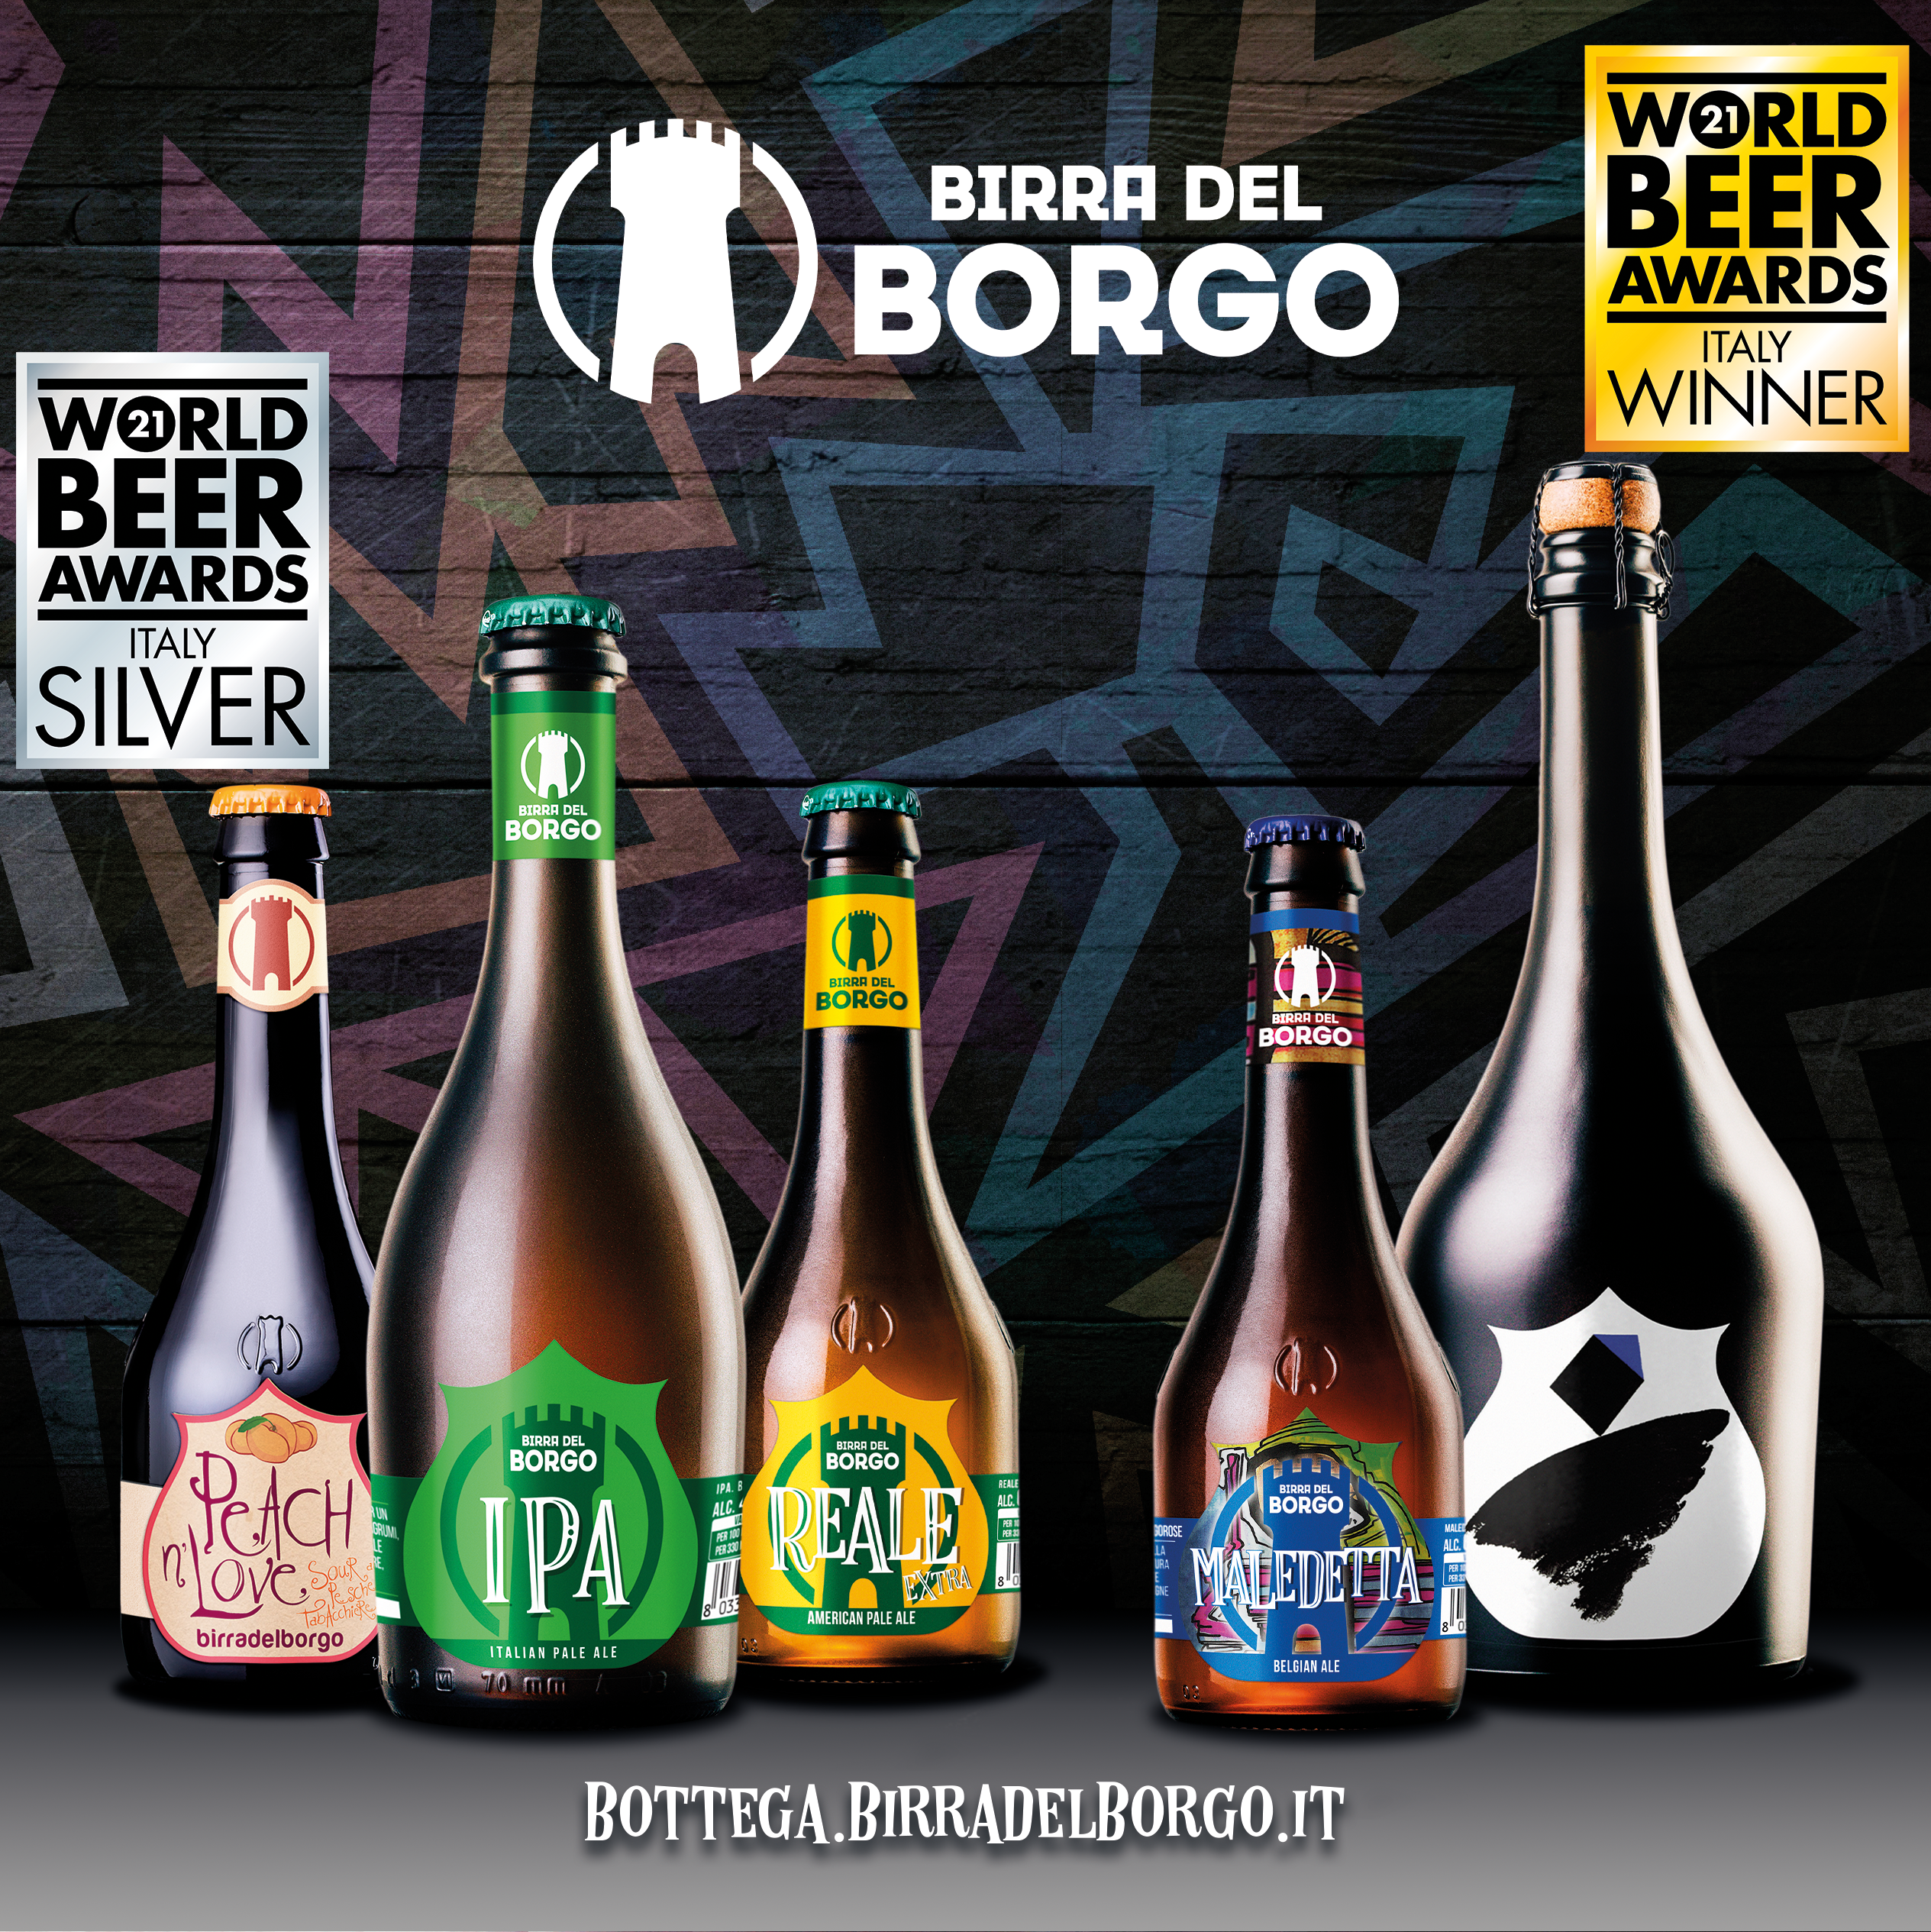 world beer awards